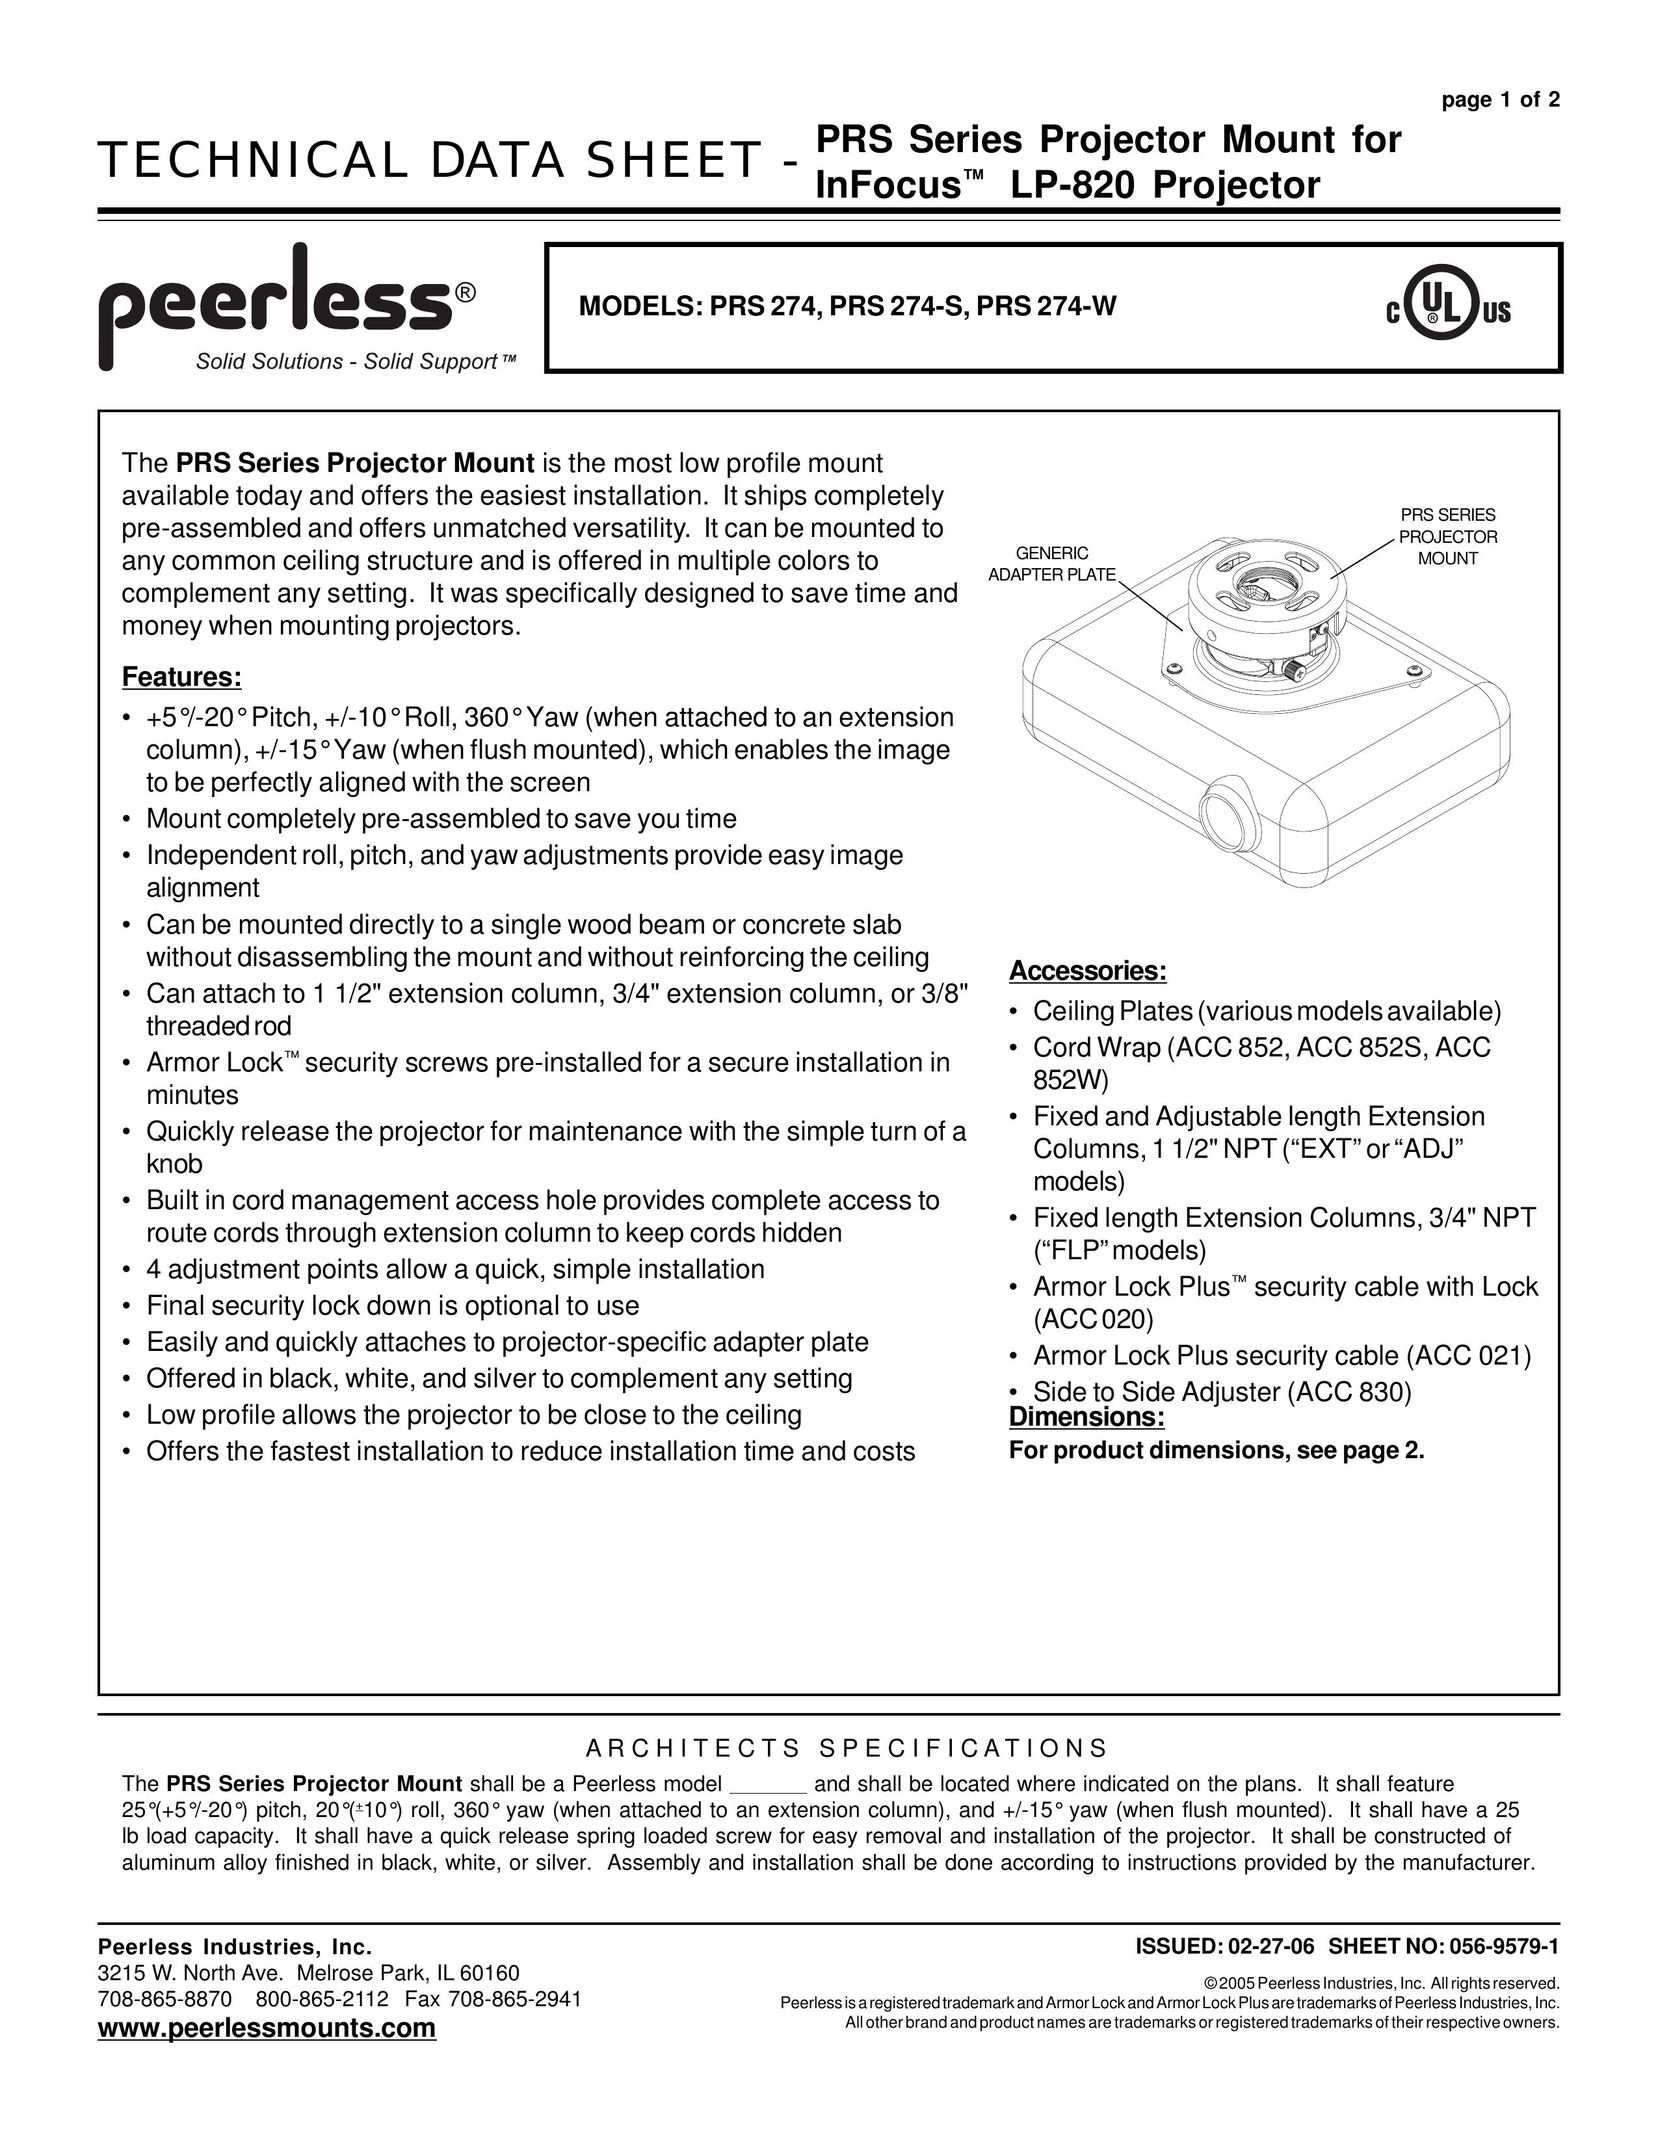 Peerless Industries PRS 274-S Projector Accessories User Manual